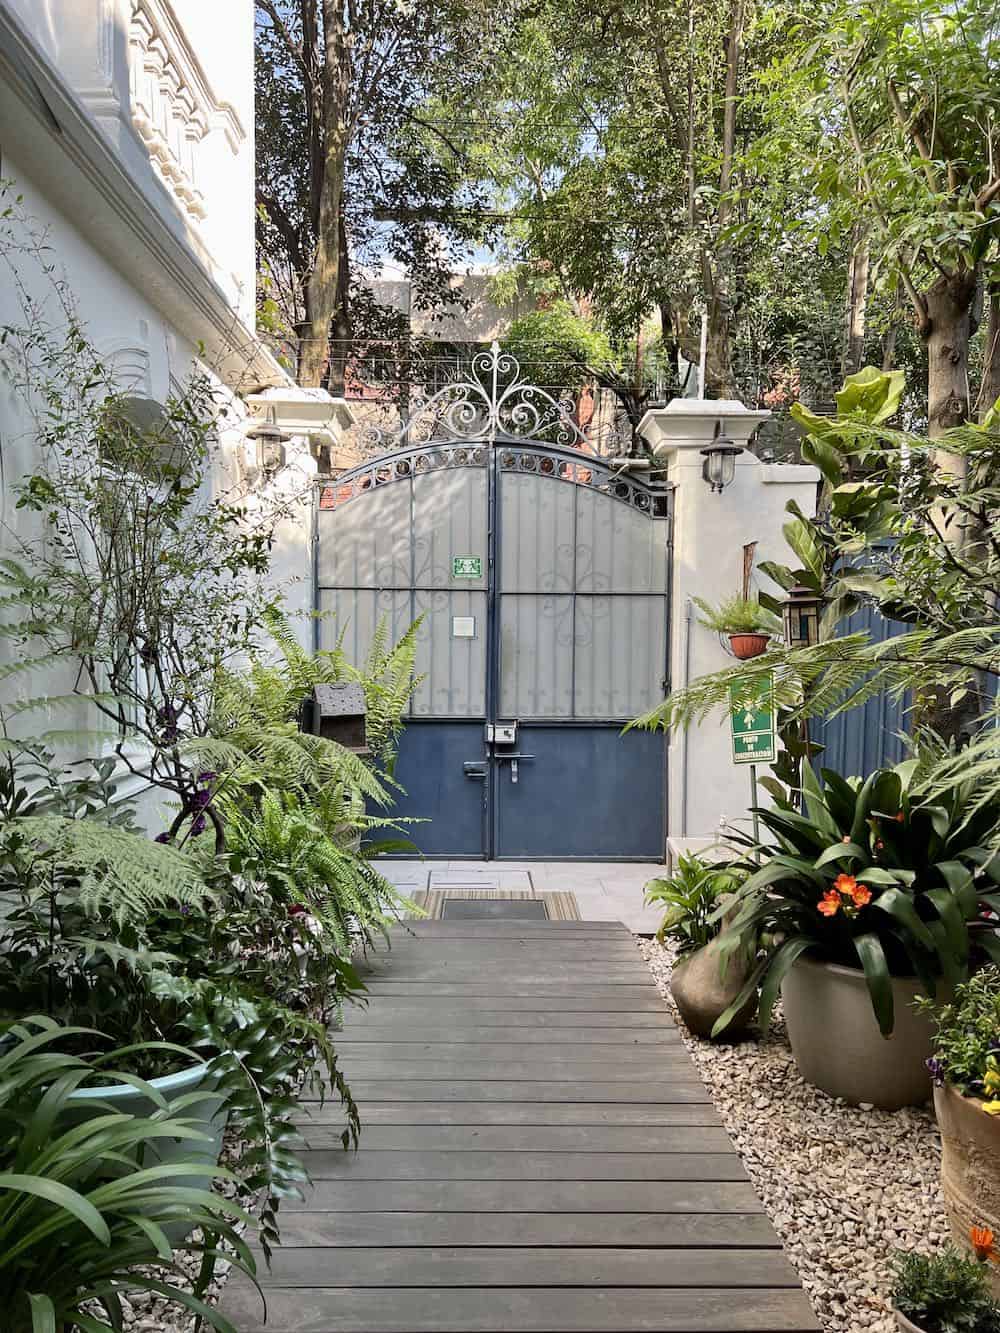 Entry gate at Hotel Villa Condesa. 